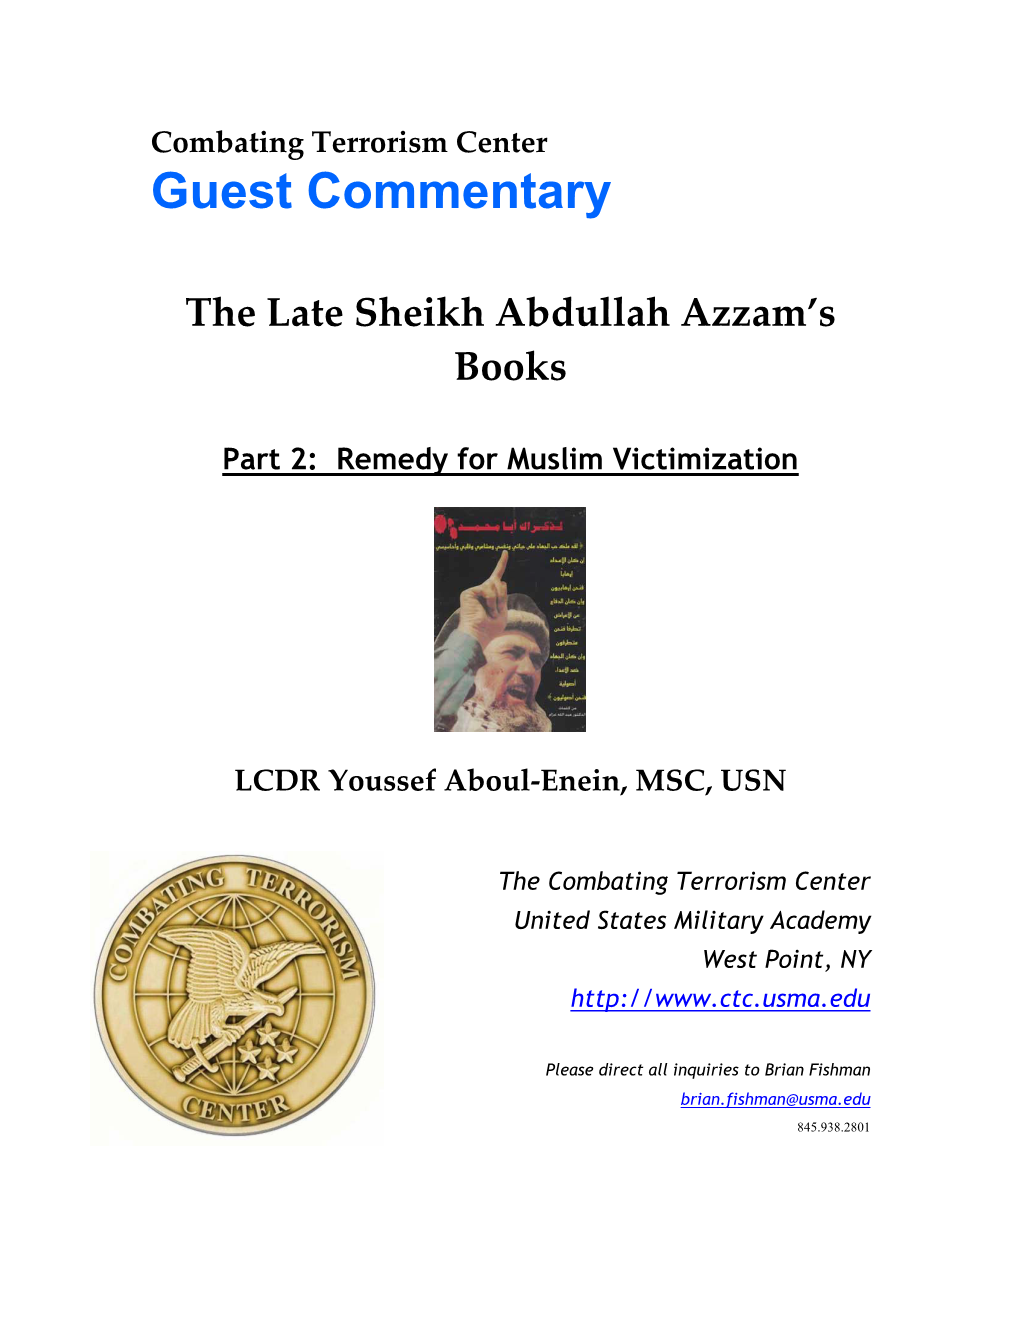 The Late Sheikh Abdullah Azzam's Books (II)